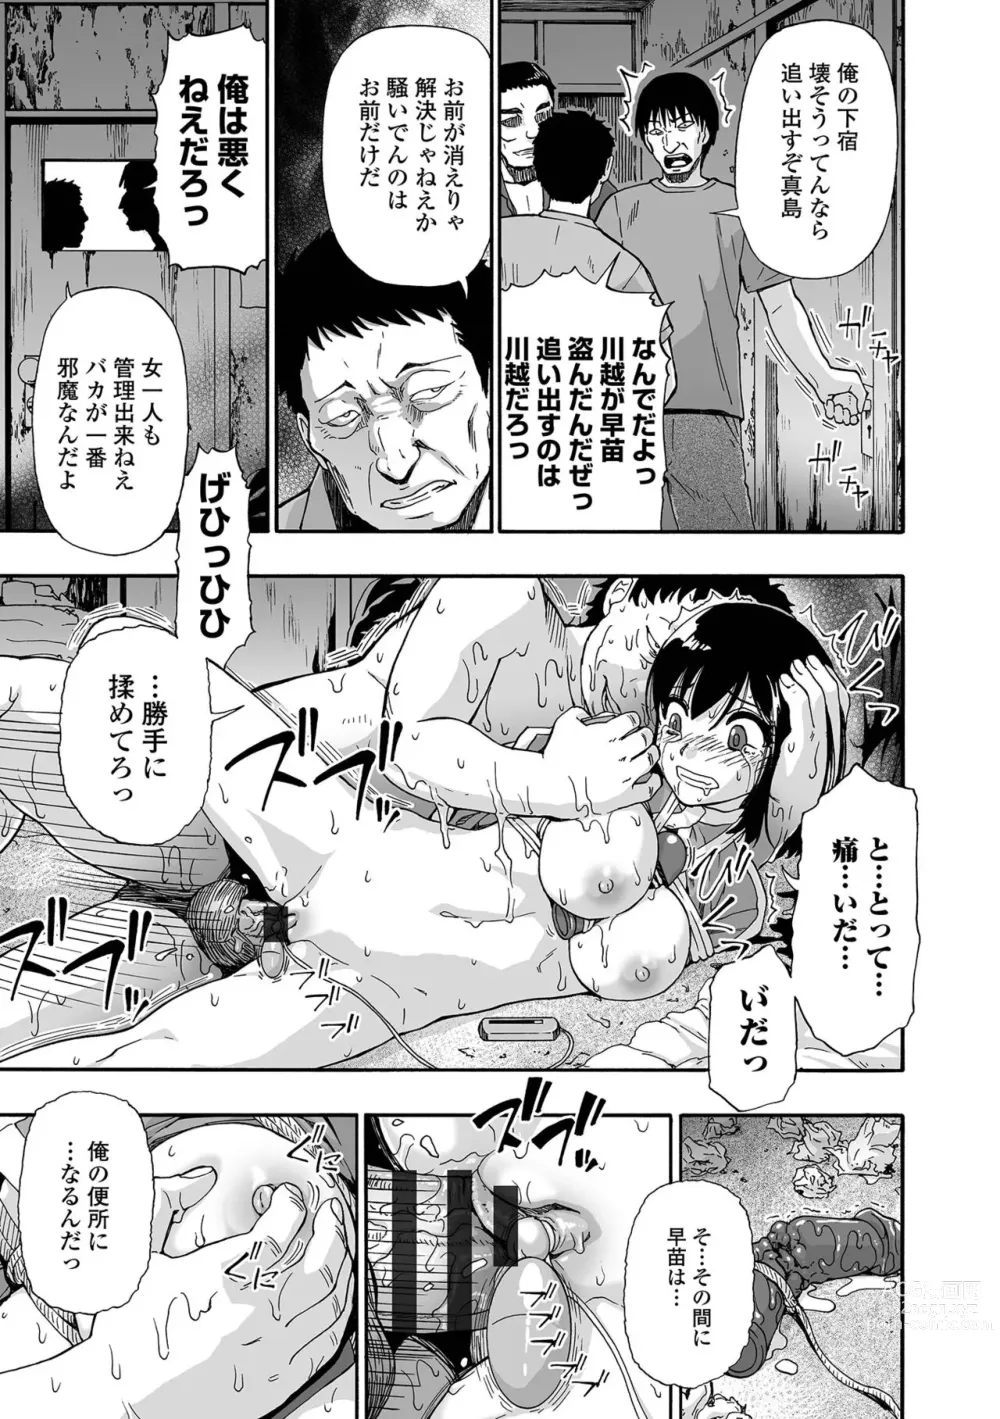 Page 35 of manga Garbage Dump Ch. 1-9